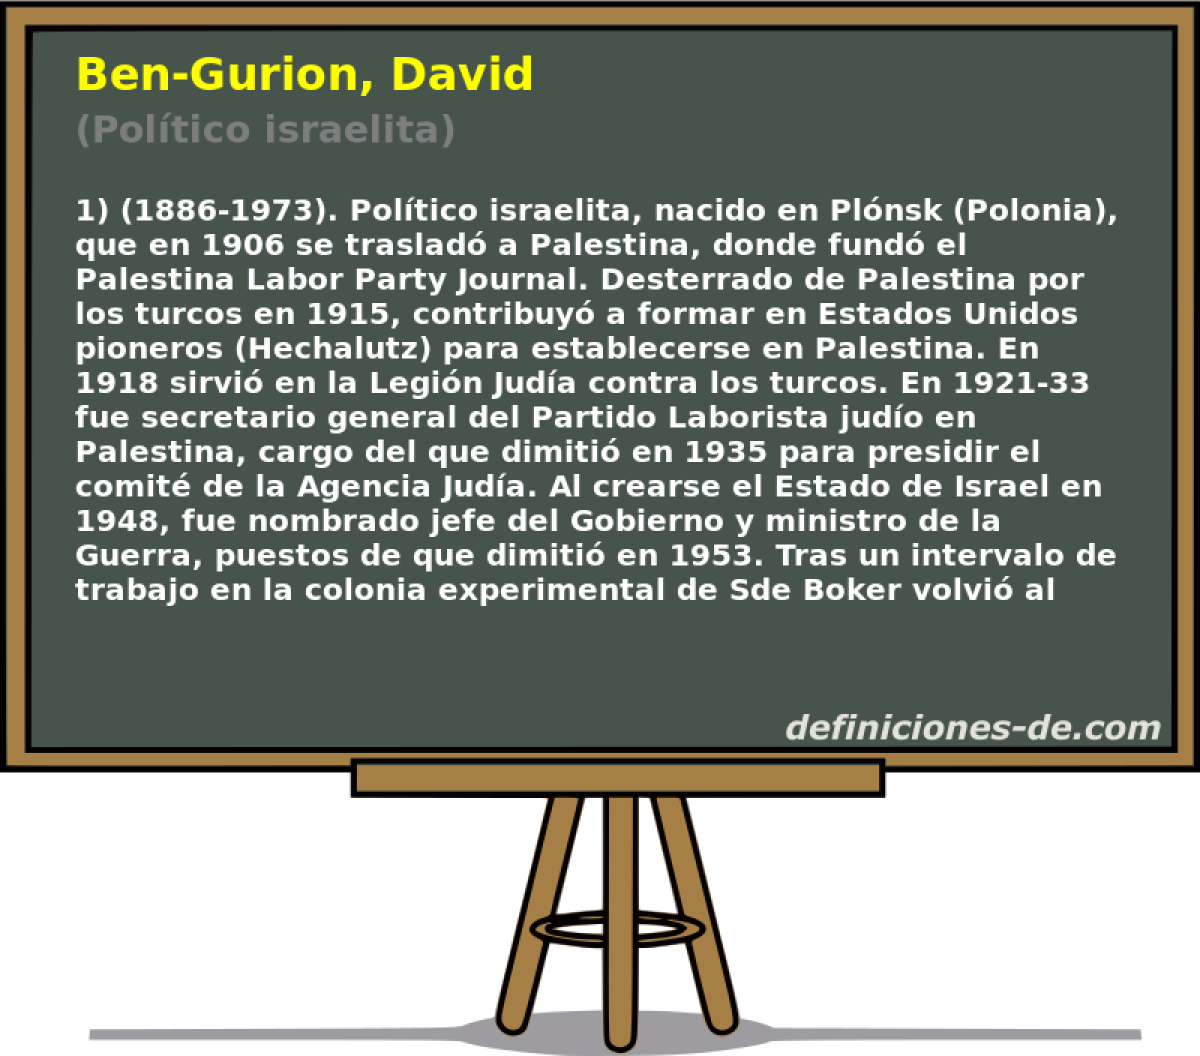 Ben-Gurion, David (Poltico israelita)